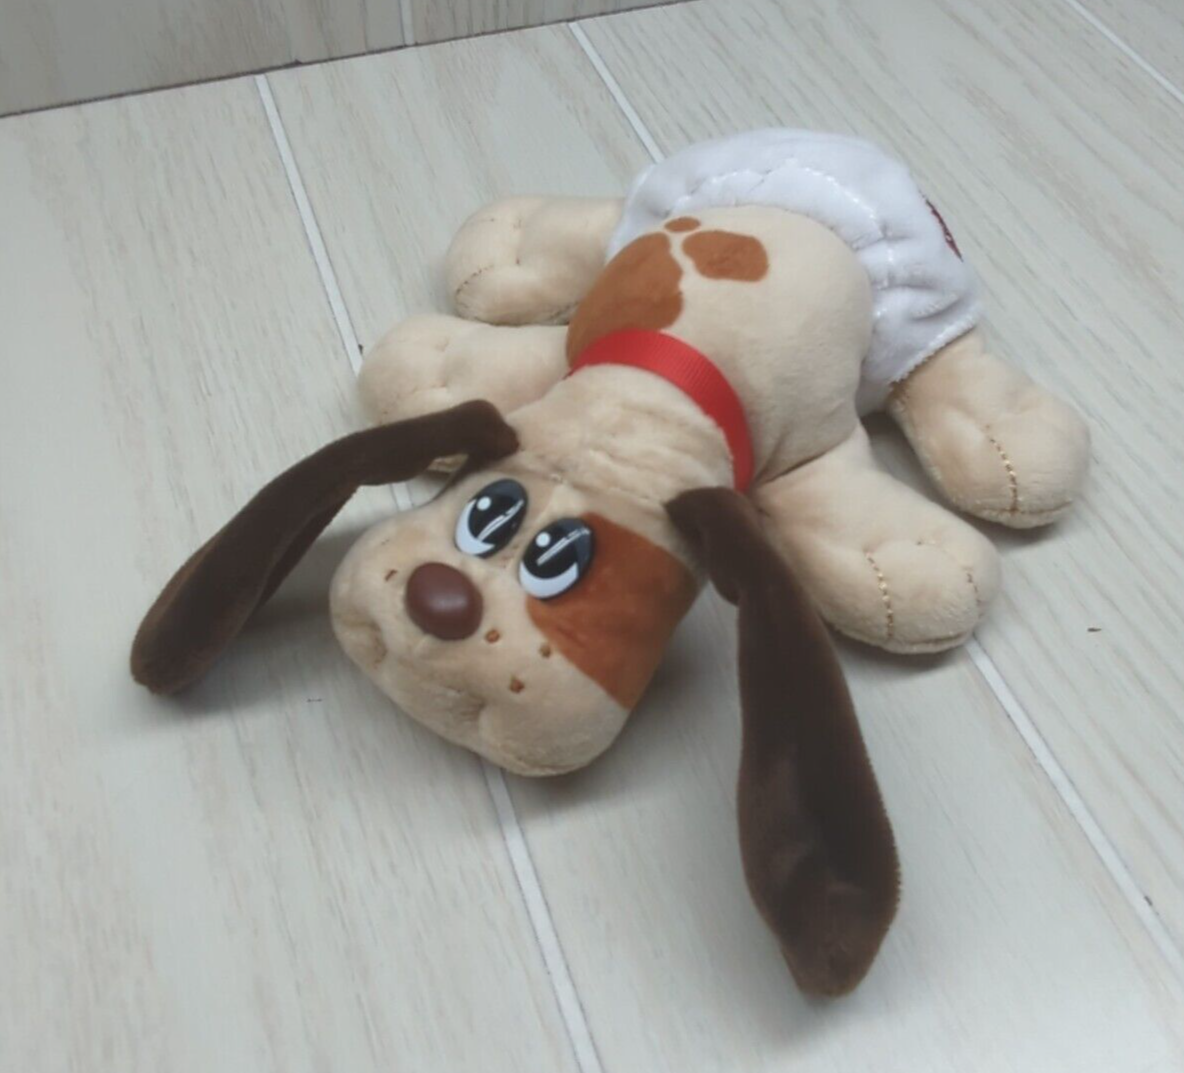 Hasbro Pound Puppies Newborn plush beige tan brown dog spots red collar diaper - $15.58